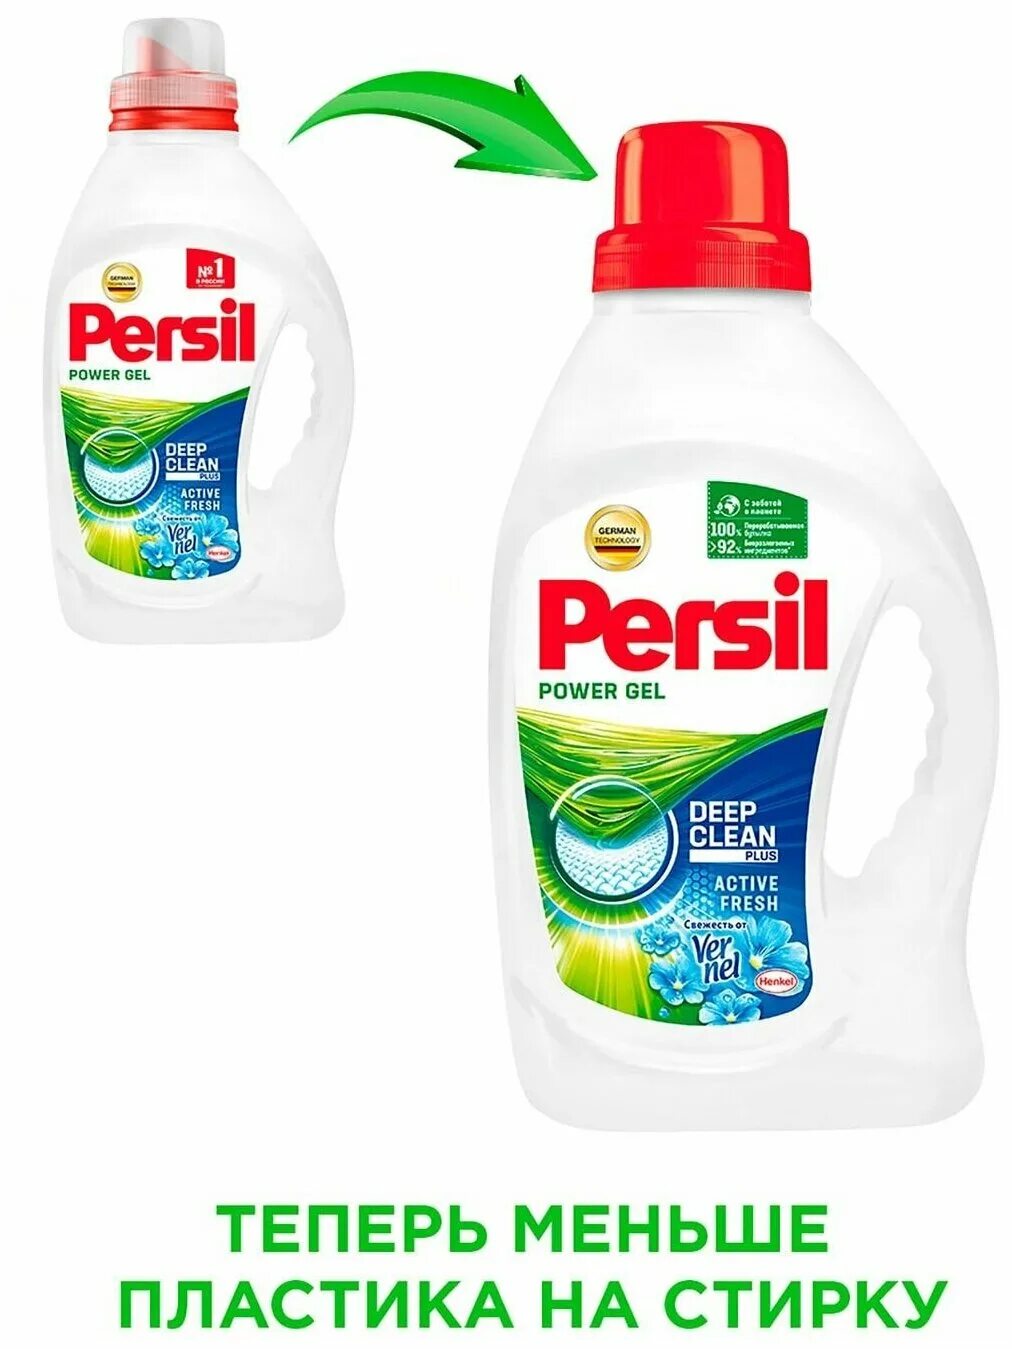 Бел пауэр. Гель для стирки Power Gel свежесть Vernel 1.3. Henkel Persil Power Gel Deep clean Plus. Persil Kraft Gel. Persil Gel 2,7 л Iran.